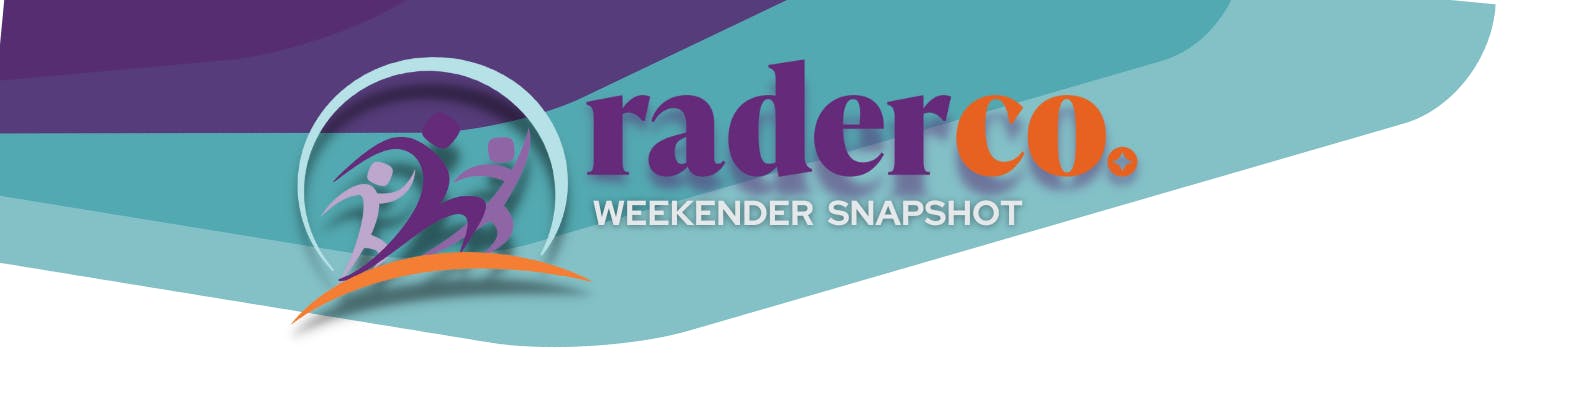 RaderCo Newsletter -Weekender Snapshot purple and teal wave logo